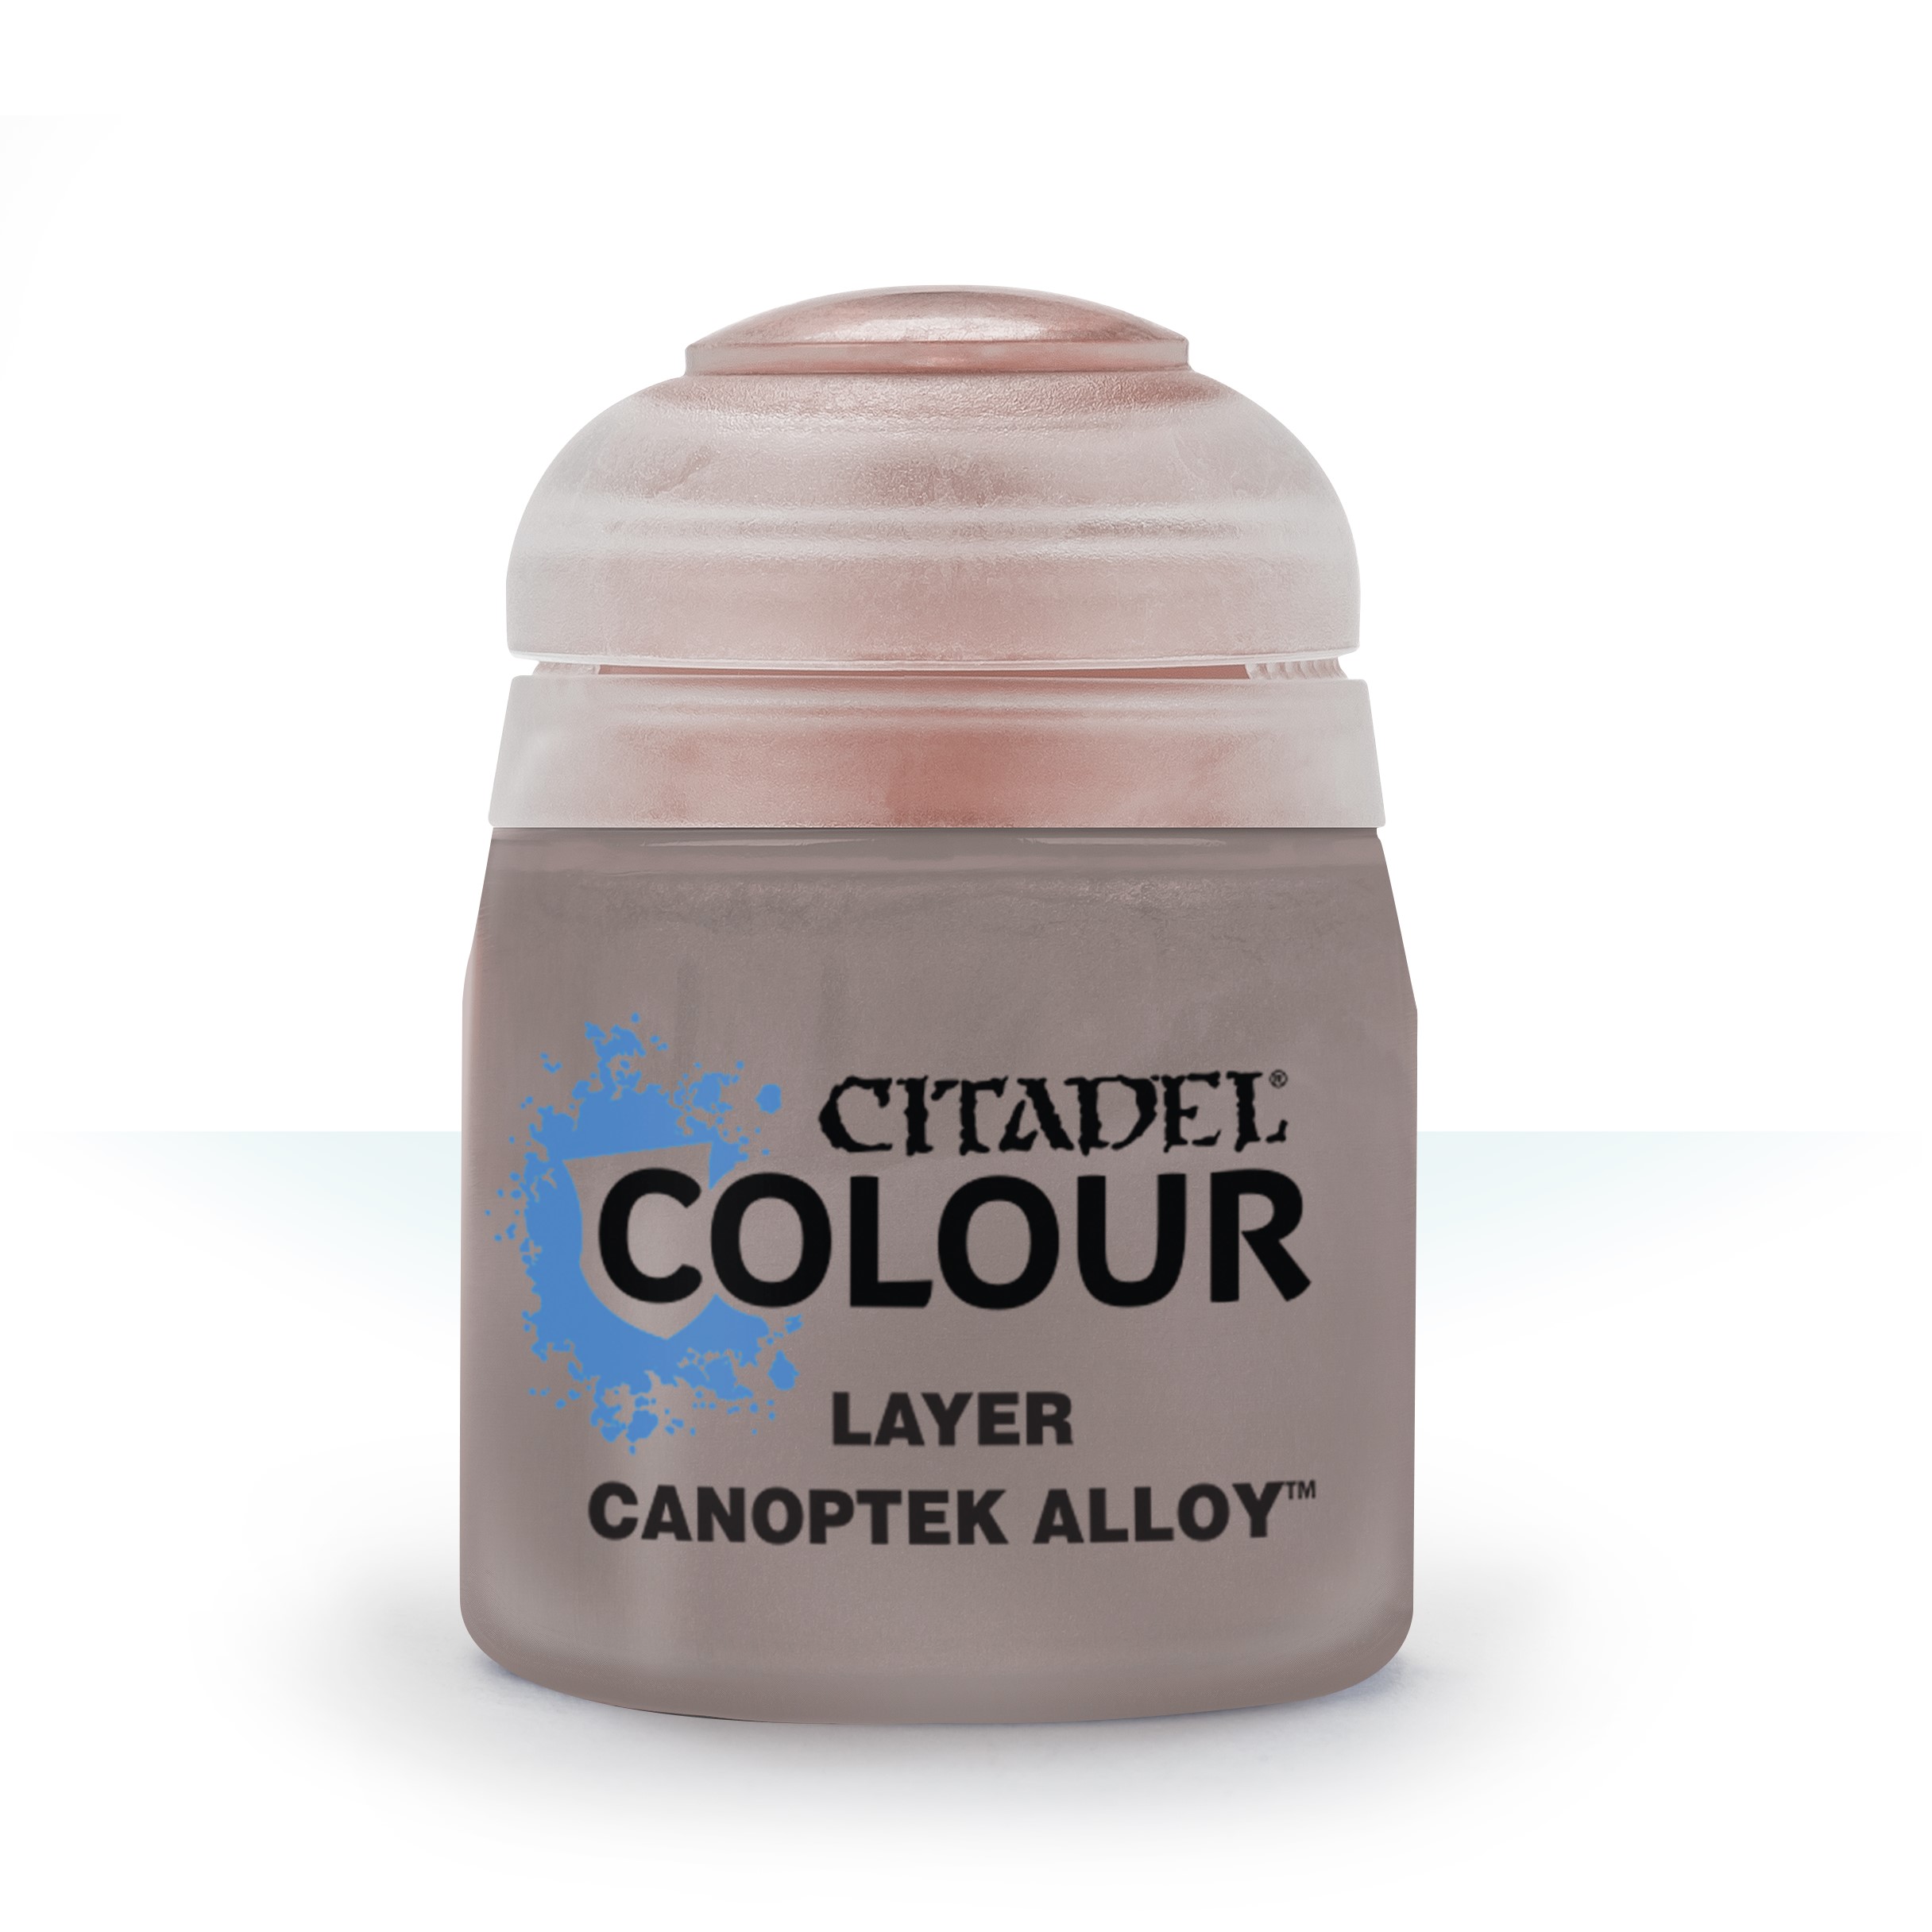 Layer Canoptek Alloy - Citadel Colour